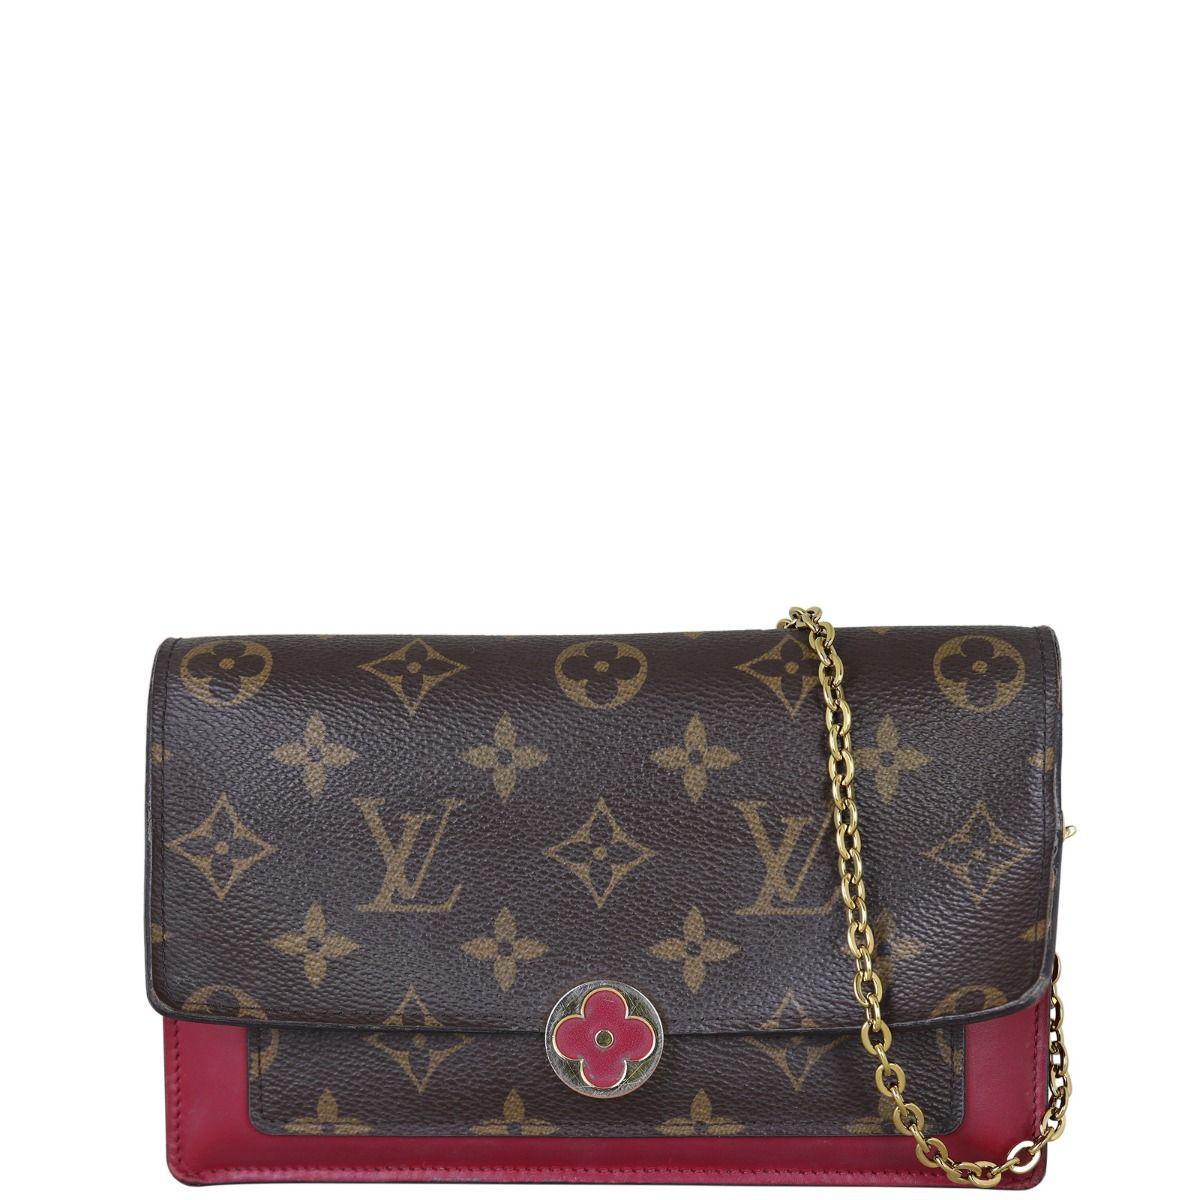 AUTHENTIC Louis Vuitton Flore Chain Wallet Clutch Rose Ballerine M69579   eBay